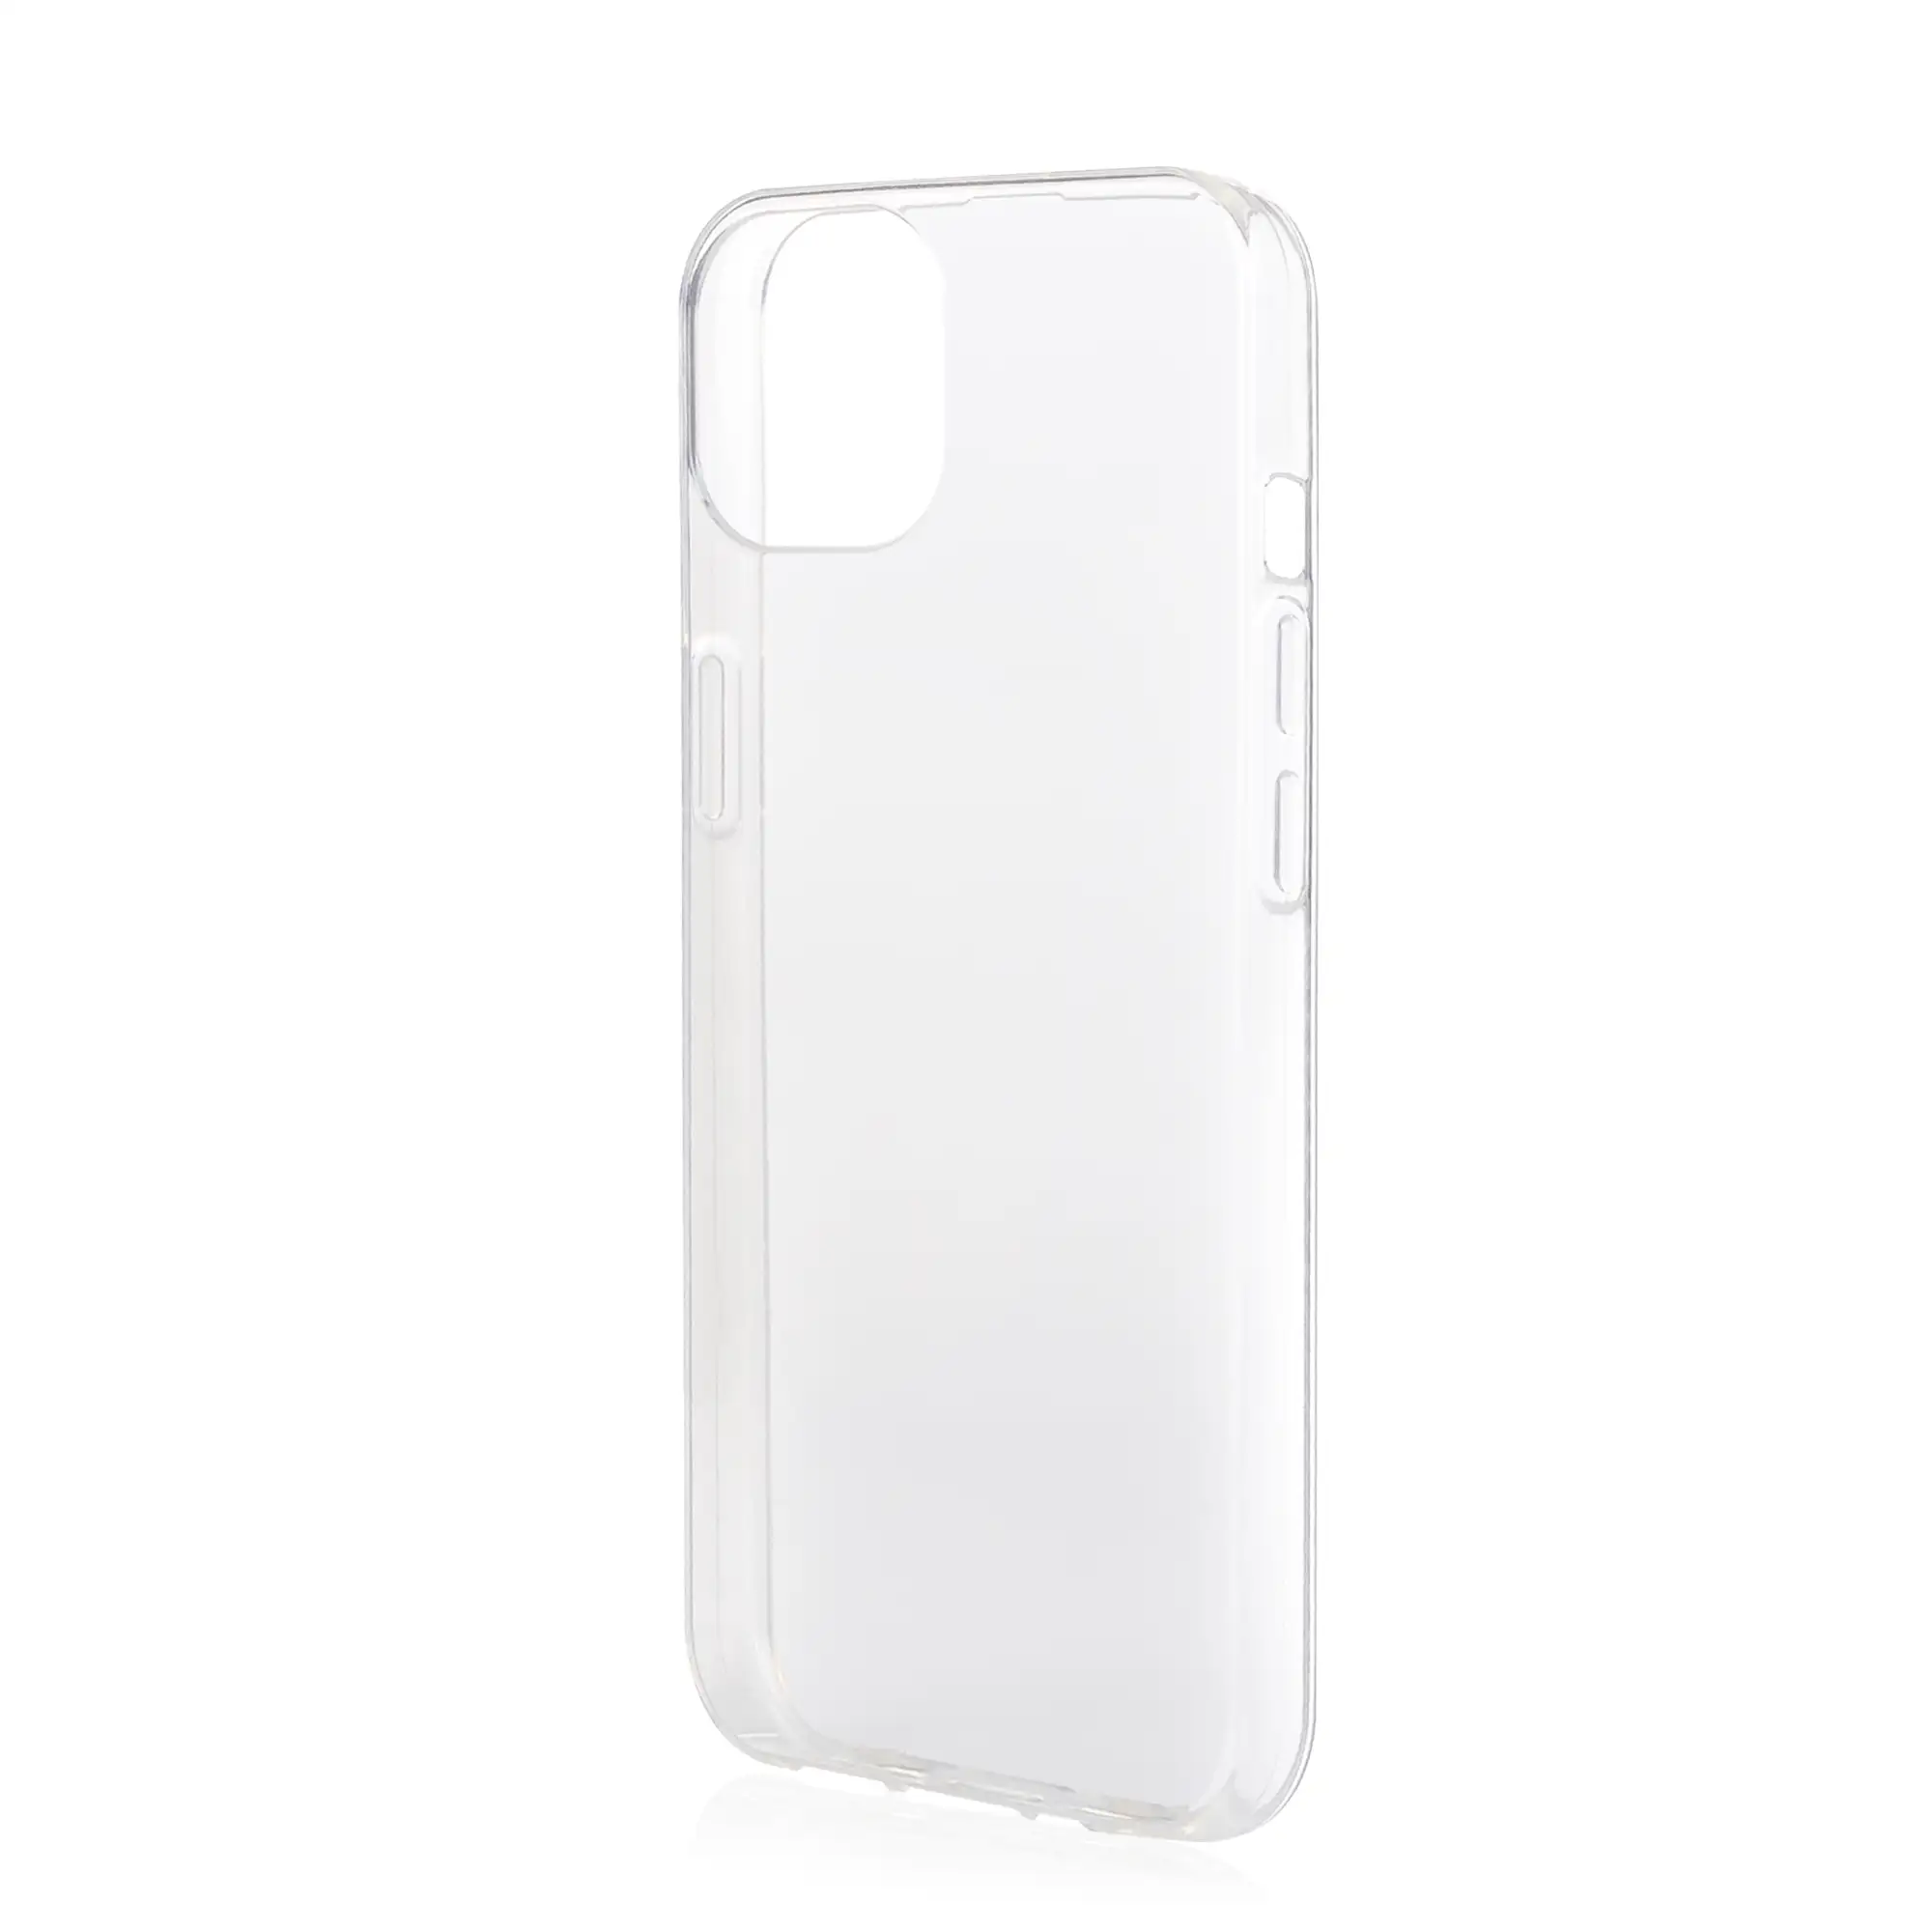 Carcasa Slim Crystal Clear de TPU transparente para iPhone 13 Pro.